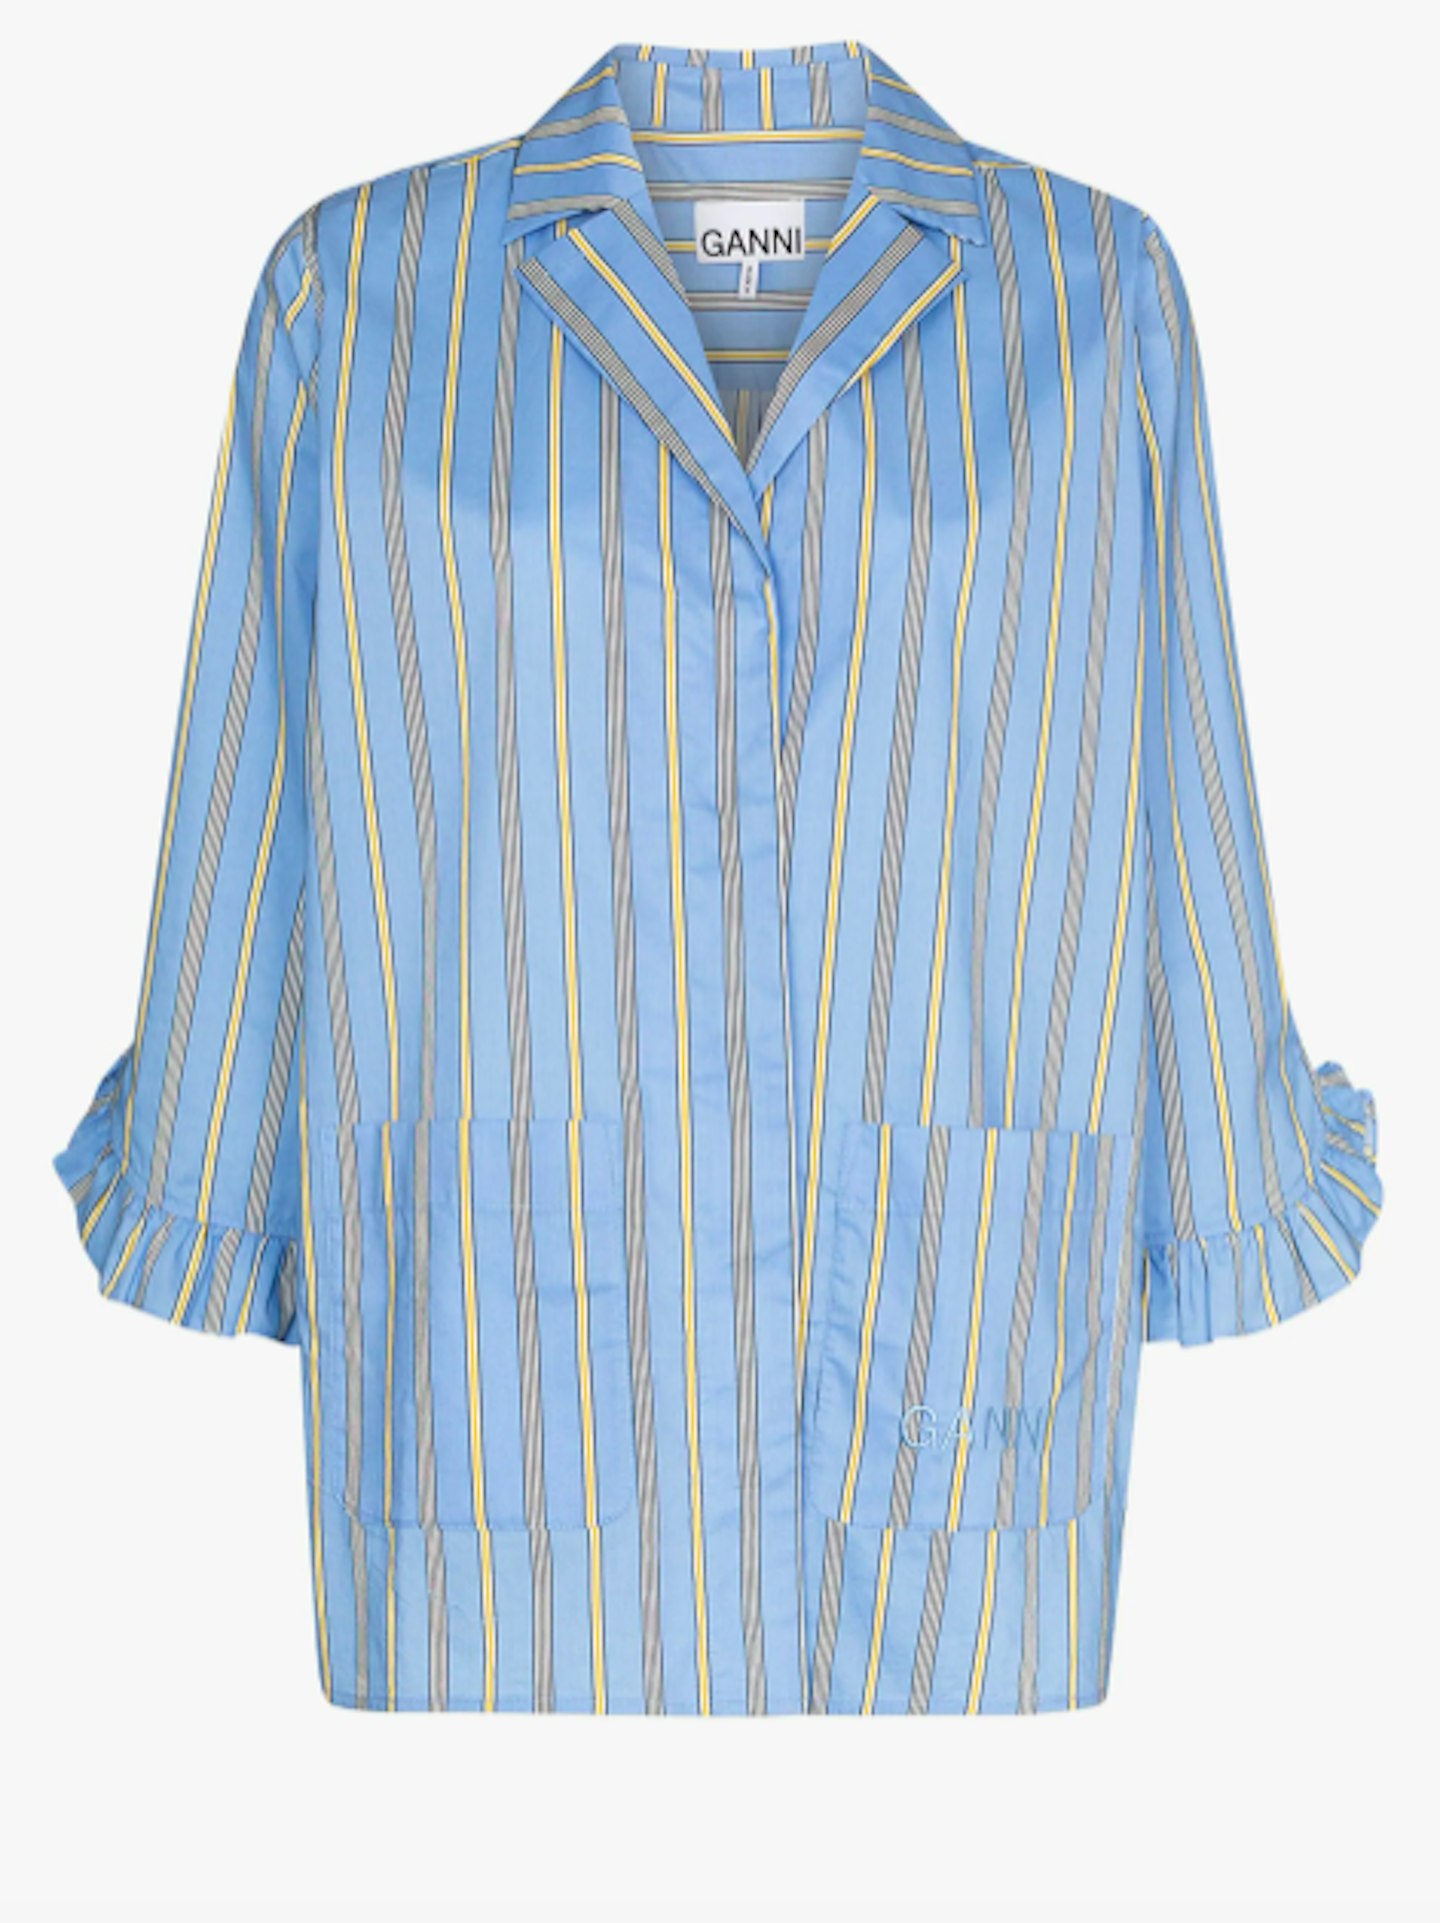 Ganni, Striped Cotton Pyjama Shirt, £140 at Browns